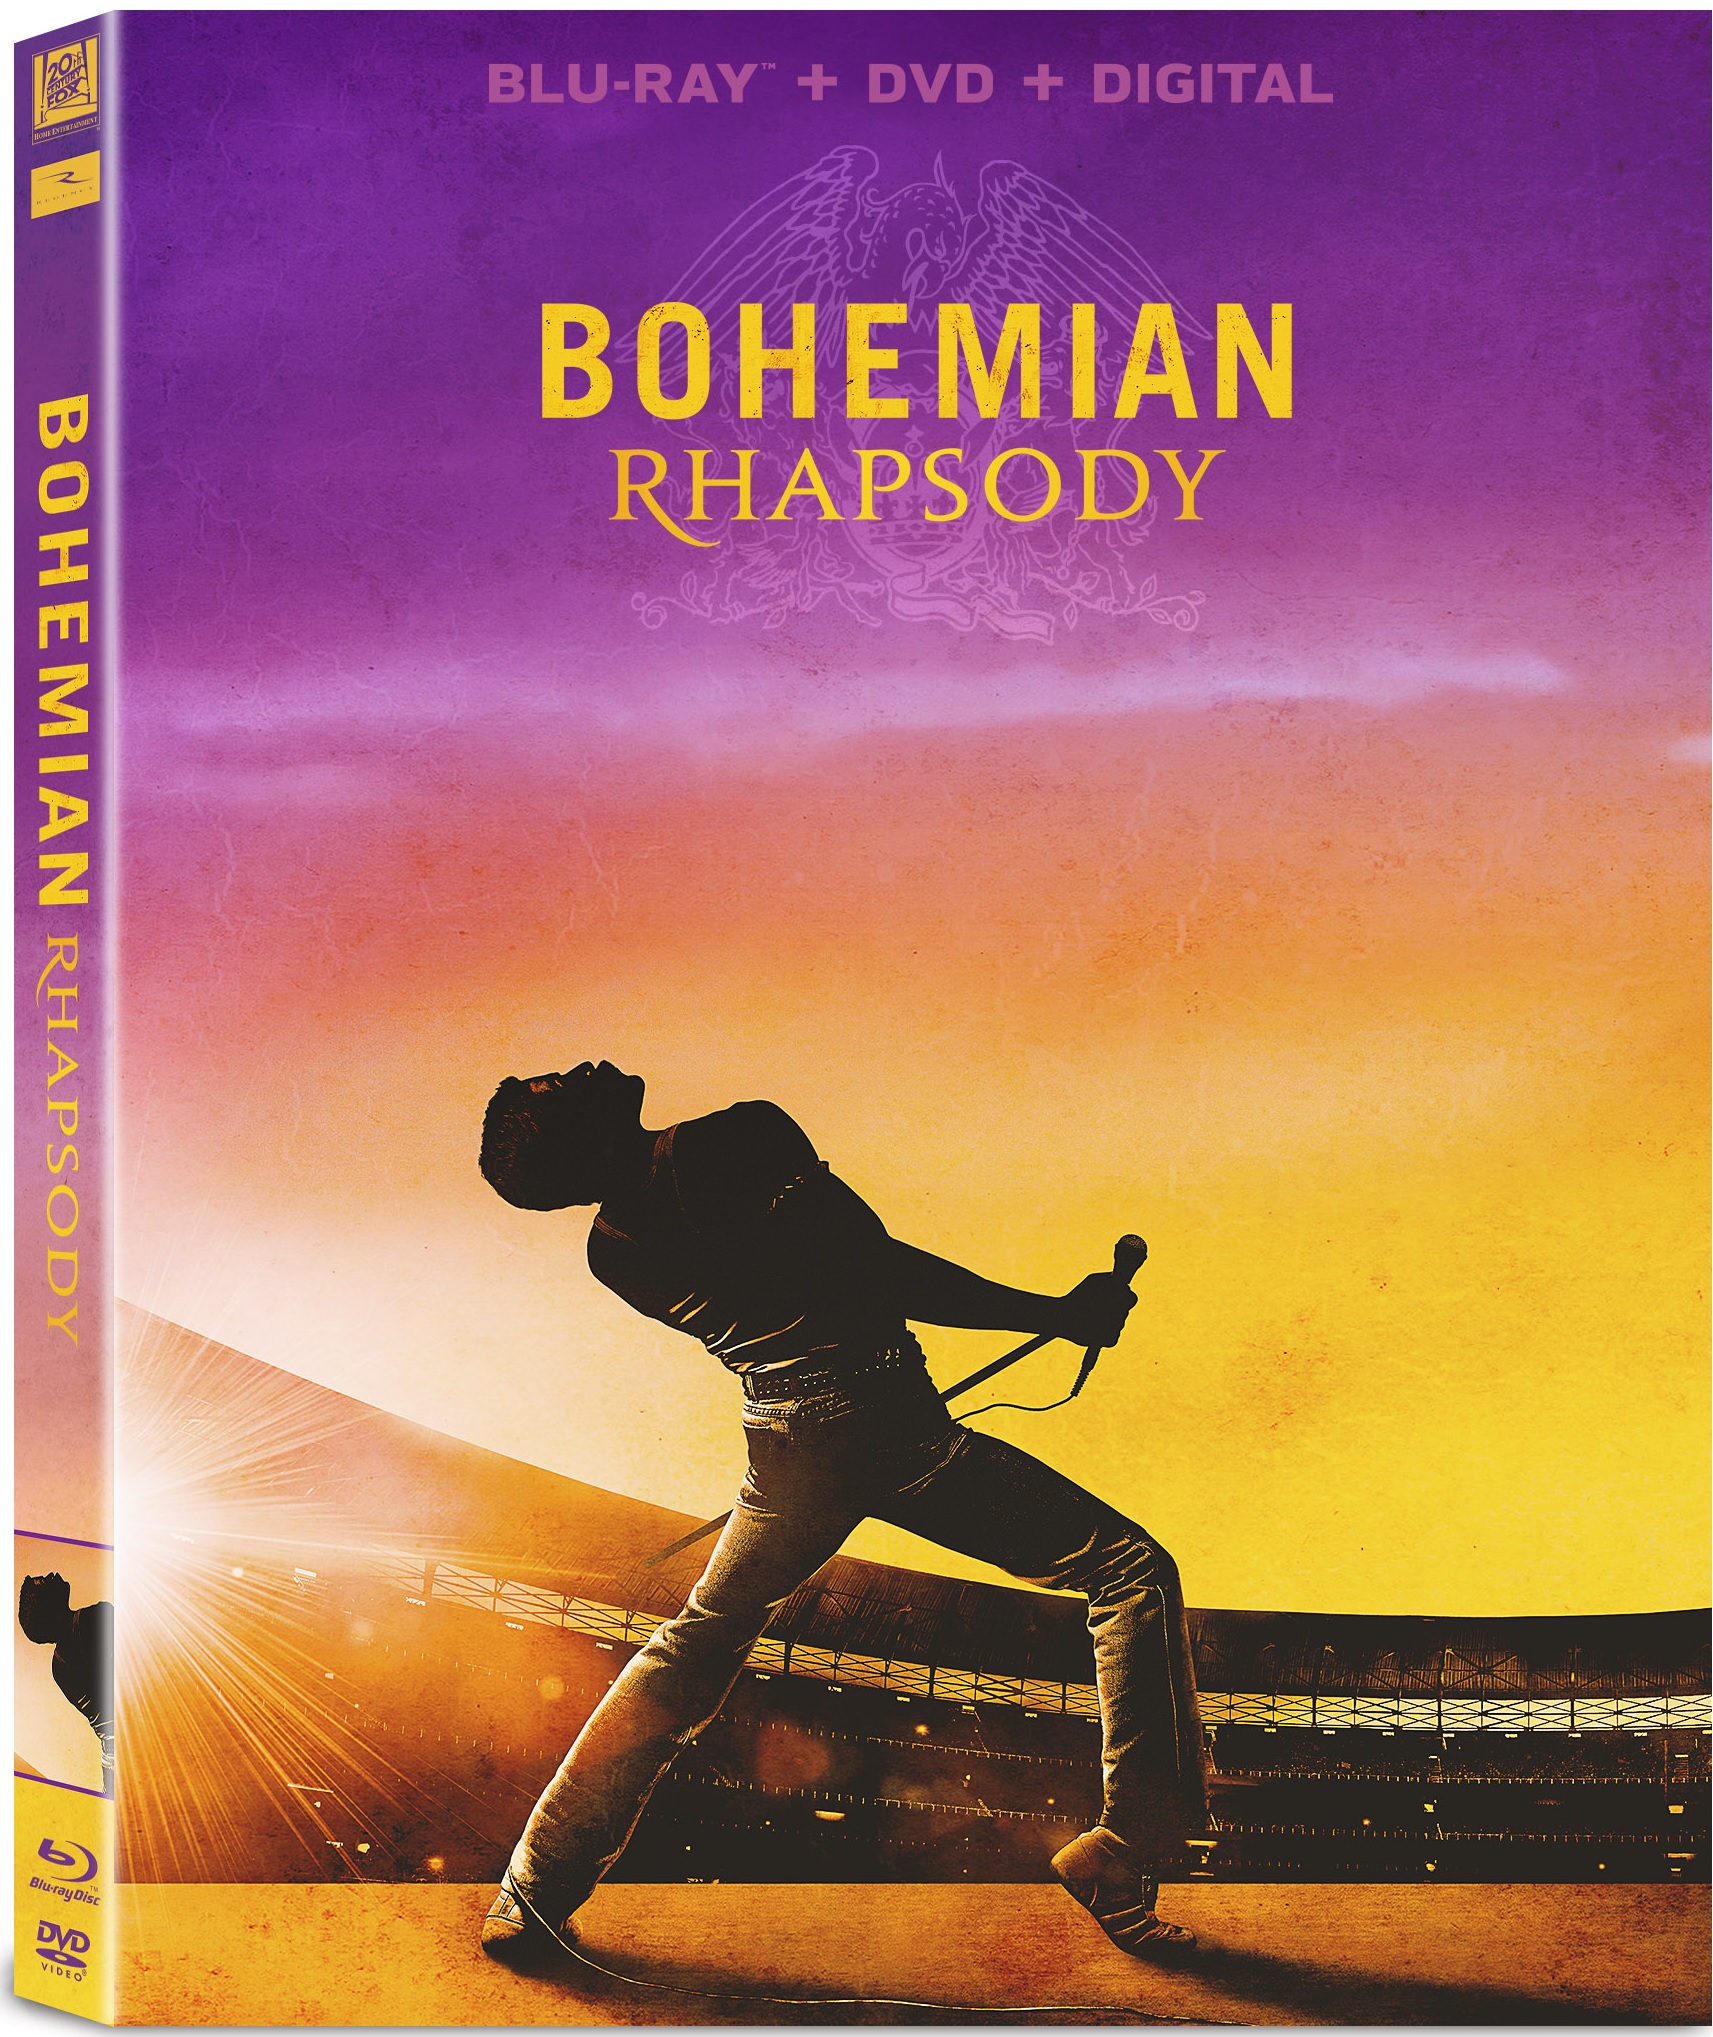 BOHEMIAN RHAPSODY Blu-ray